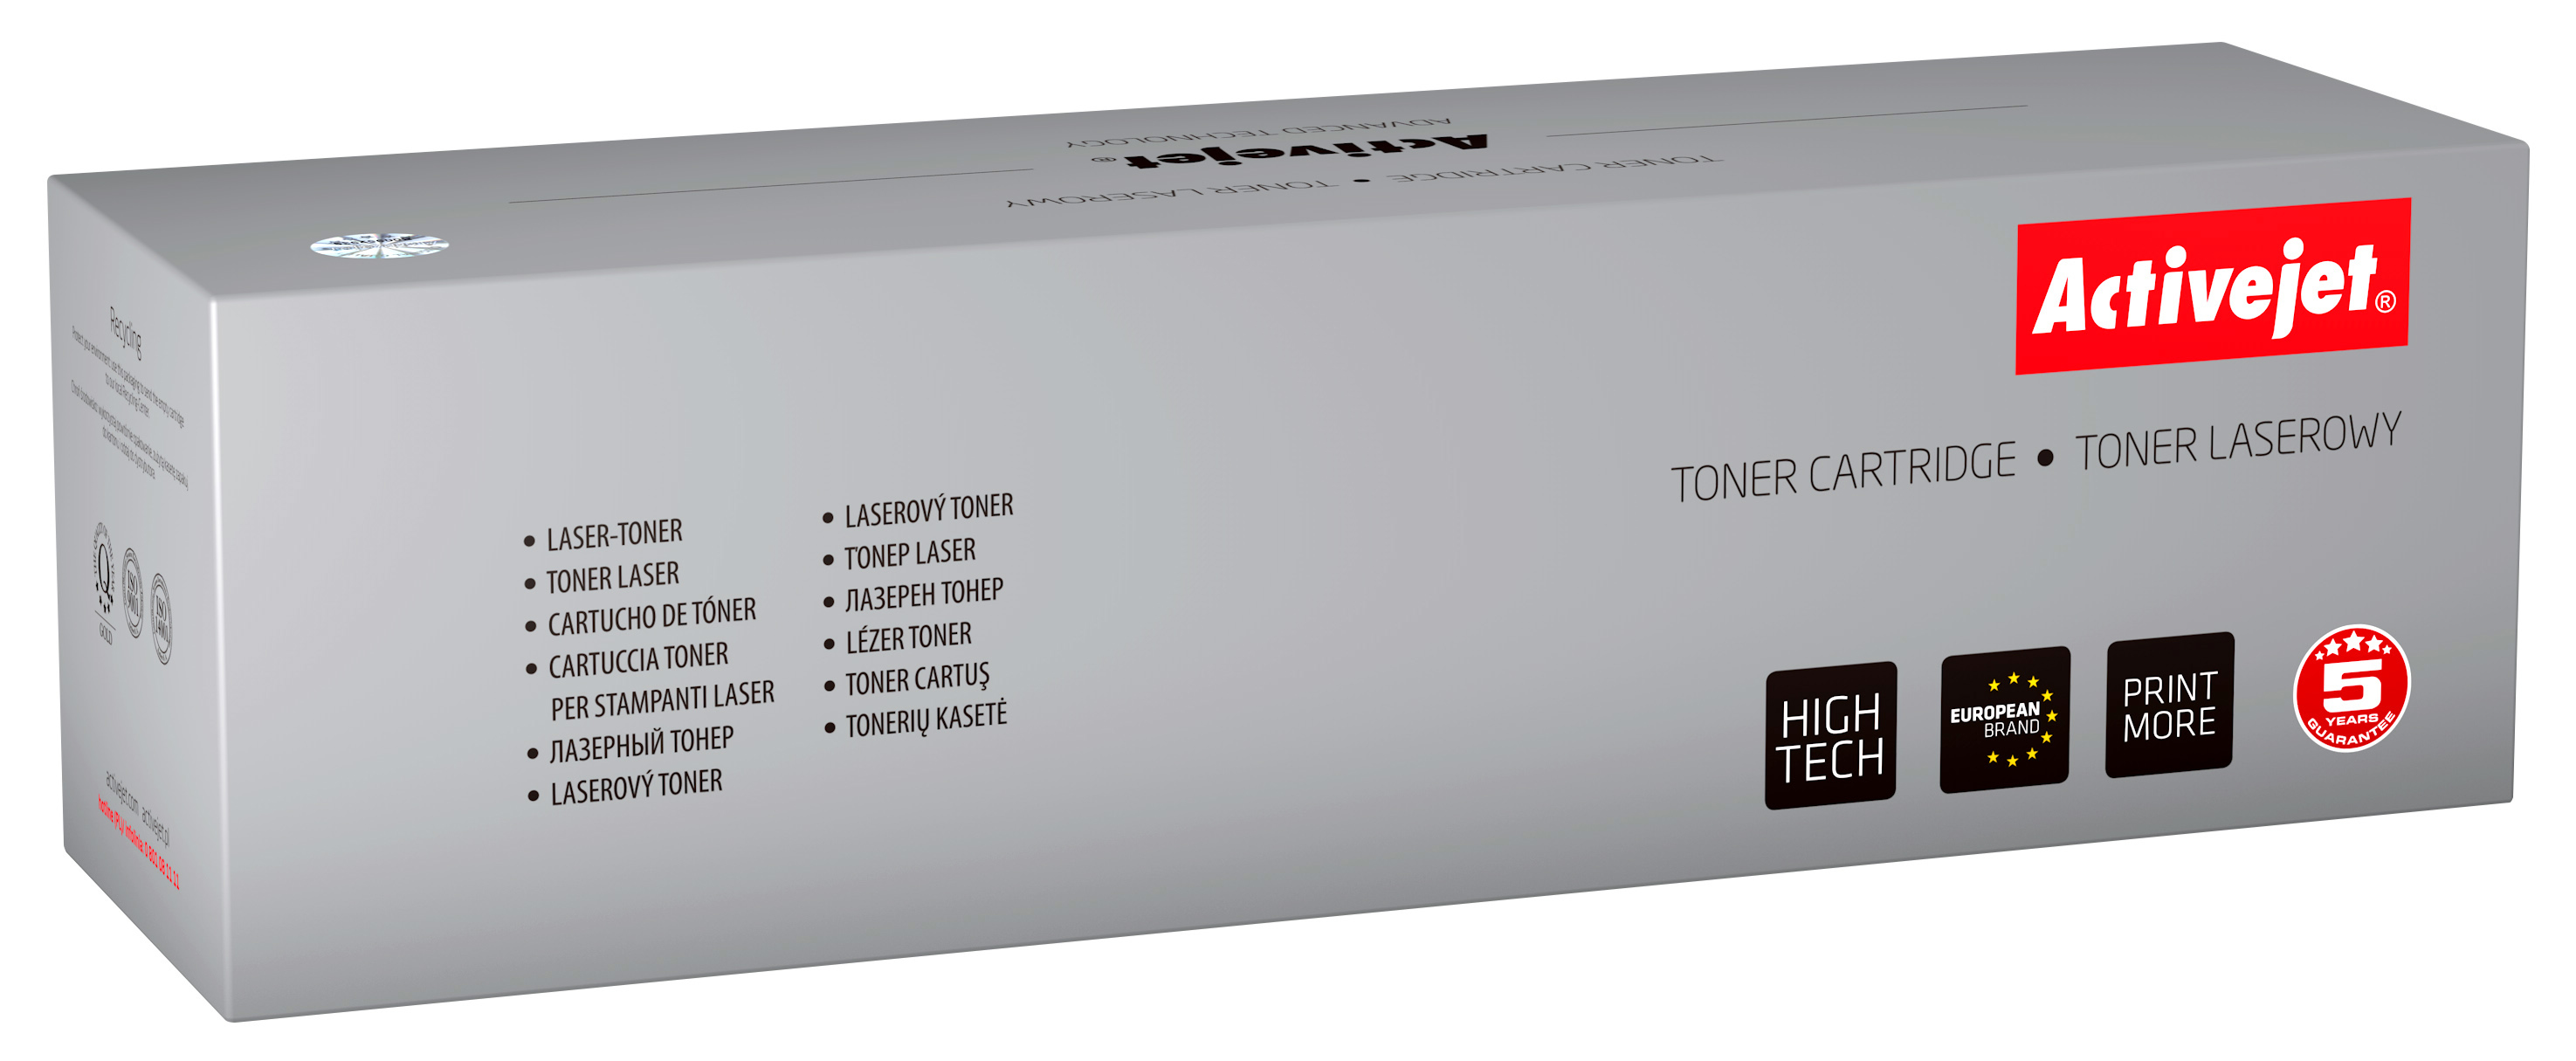 ActiveJet ATC-FX10AN Toner voor Canon-printer; Canon FX-10 vervanging; Premie; 2000 pagina's; zwart.